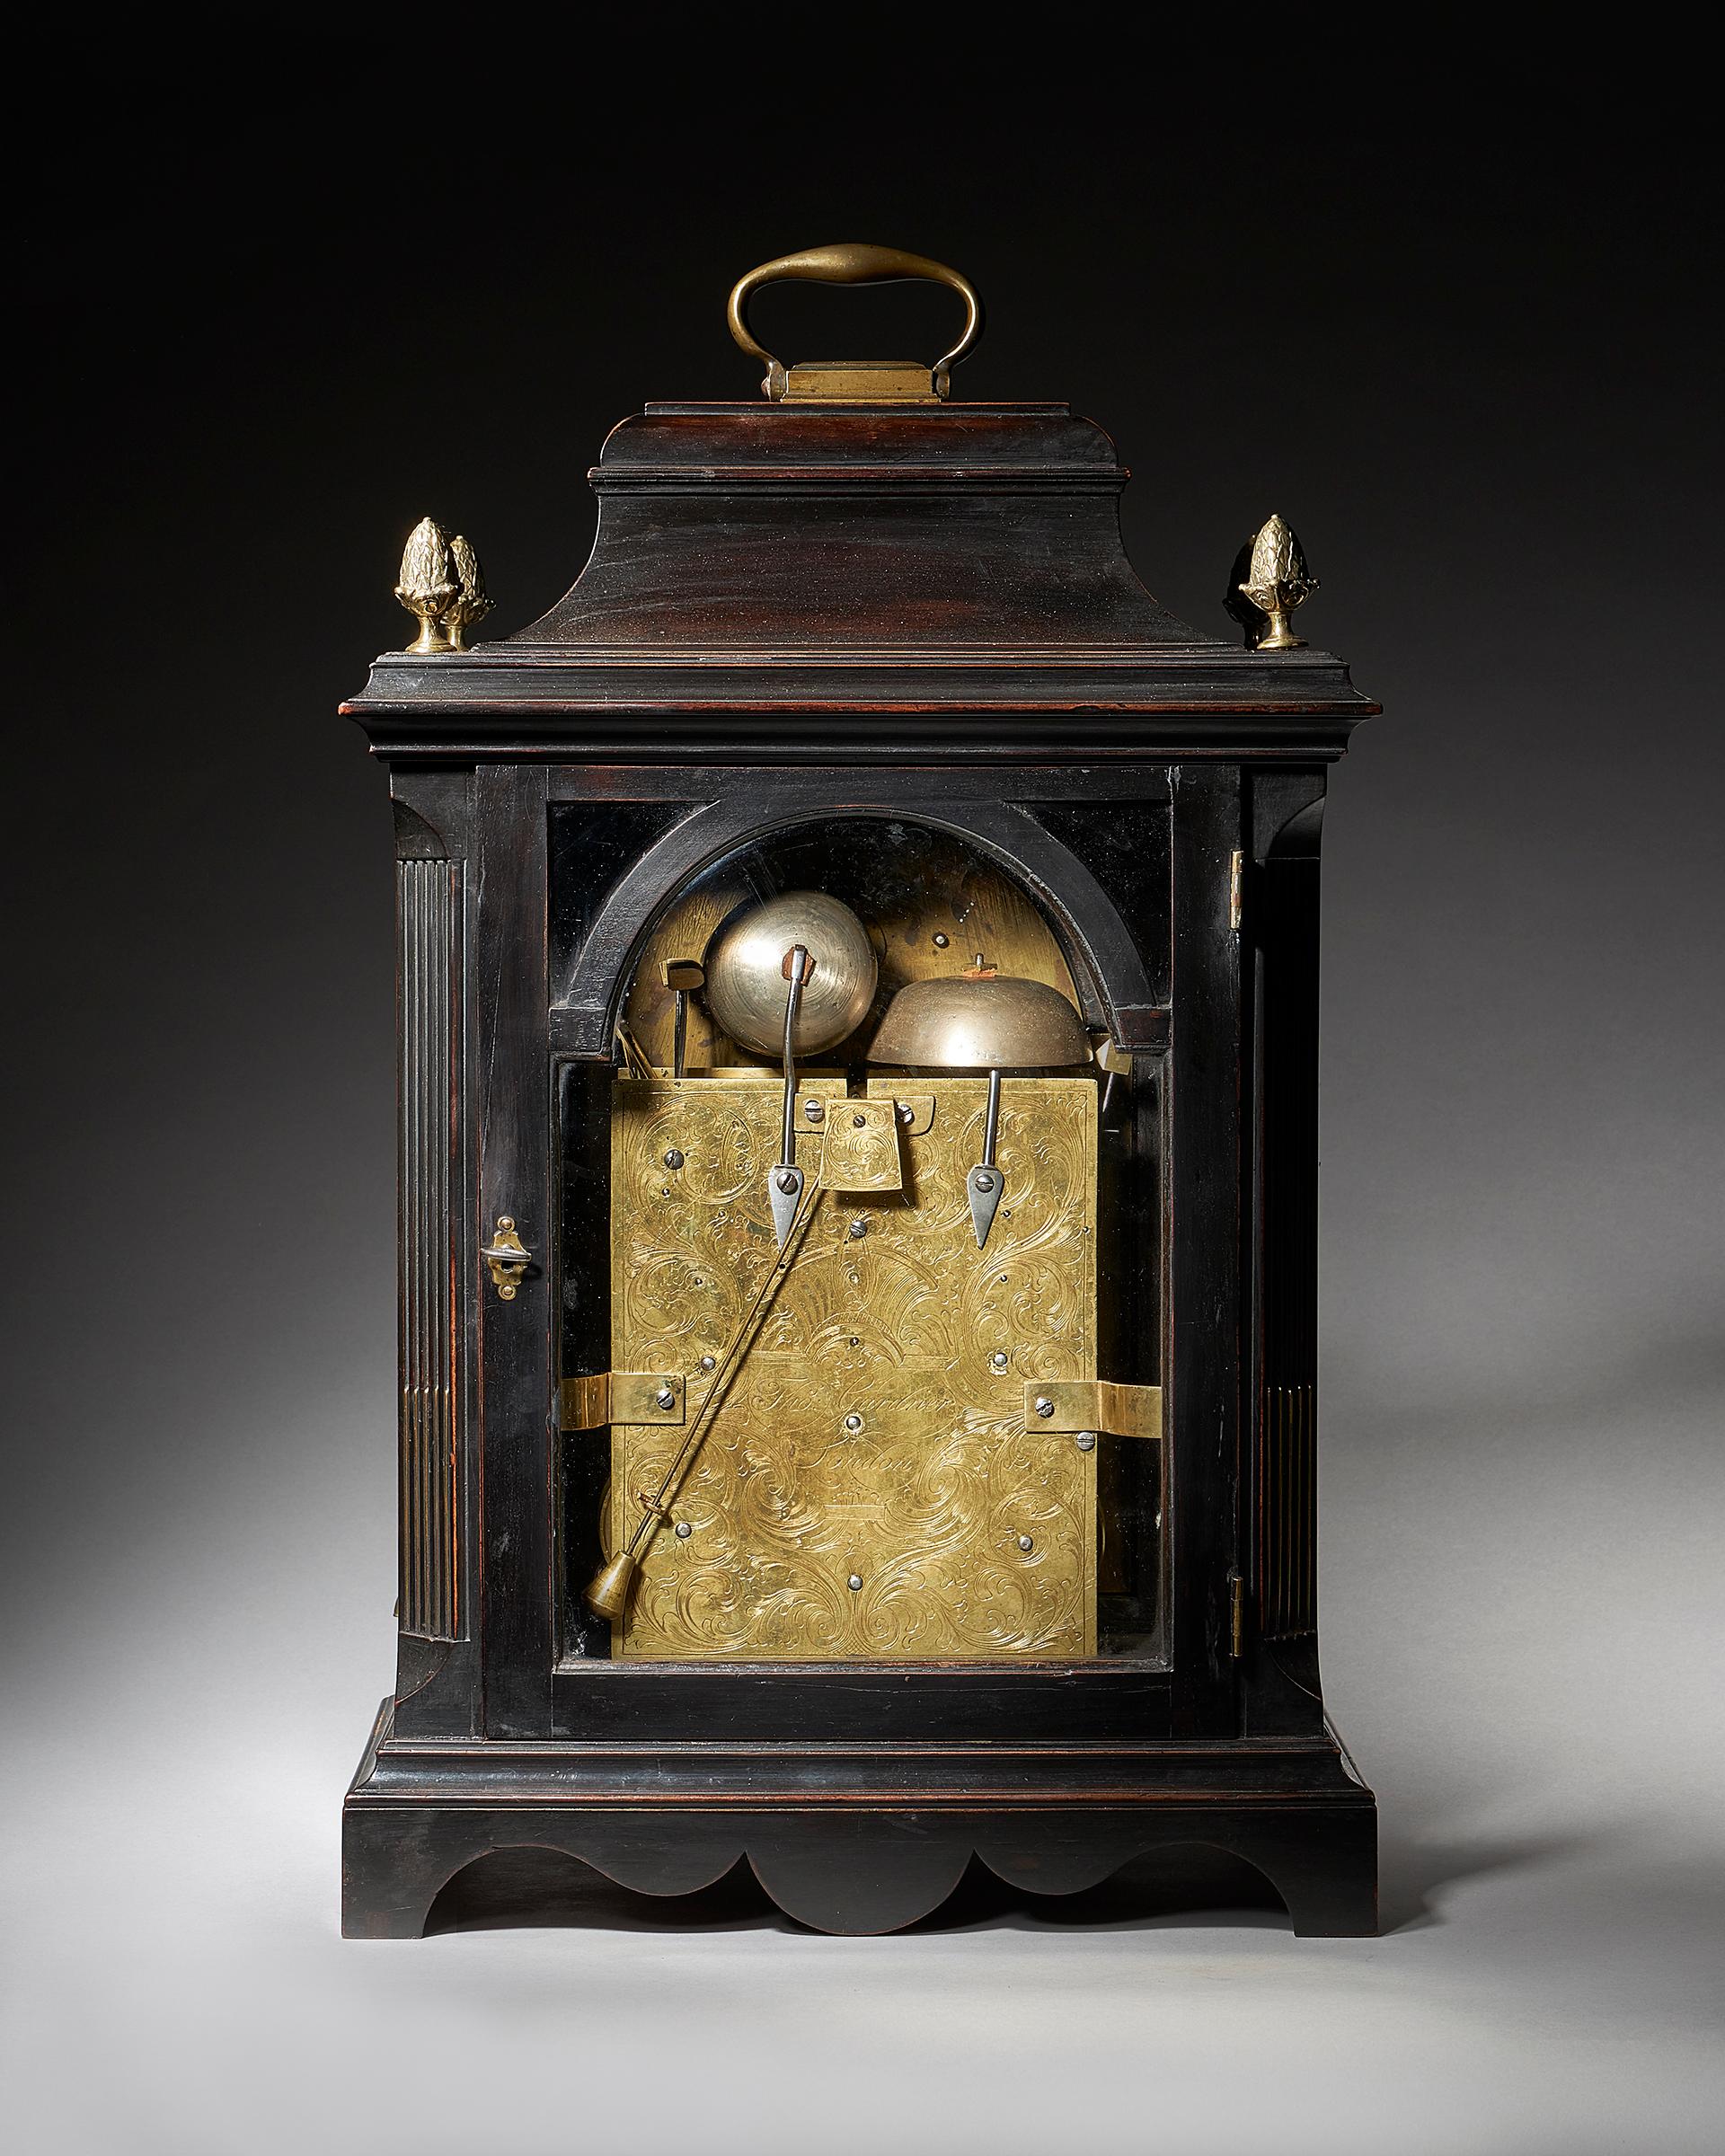 English Extremely Rare George III 18th Century Quarter-Striking Bracket Clock, Signed